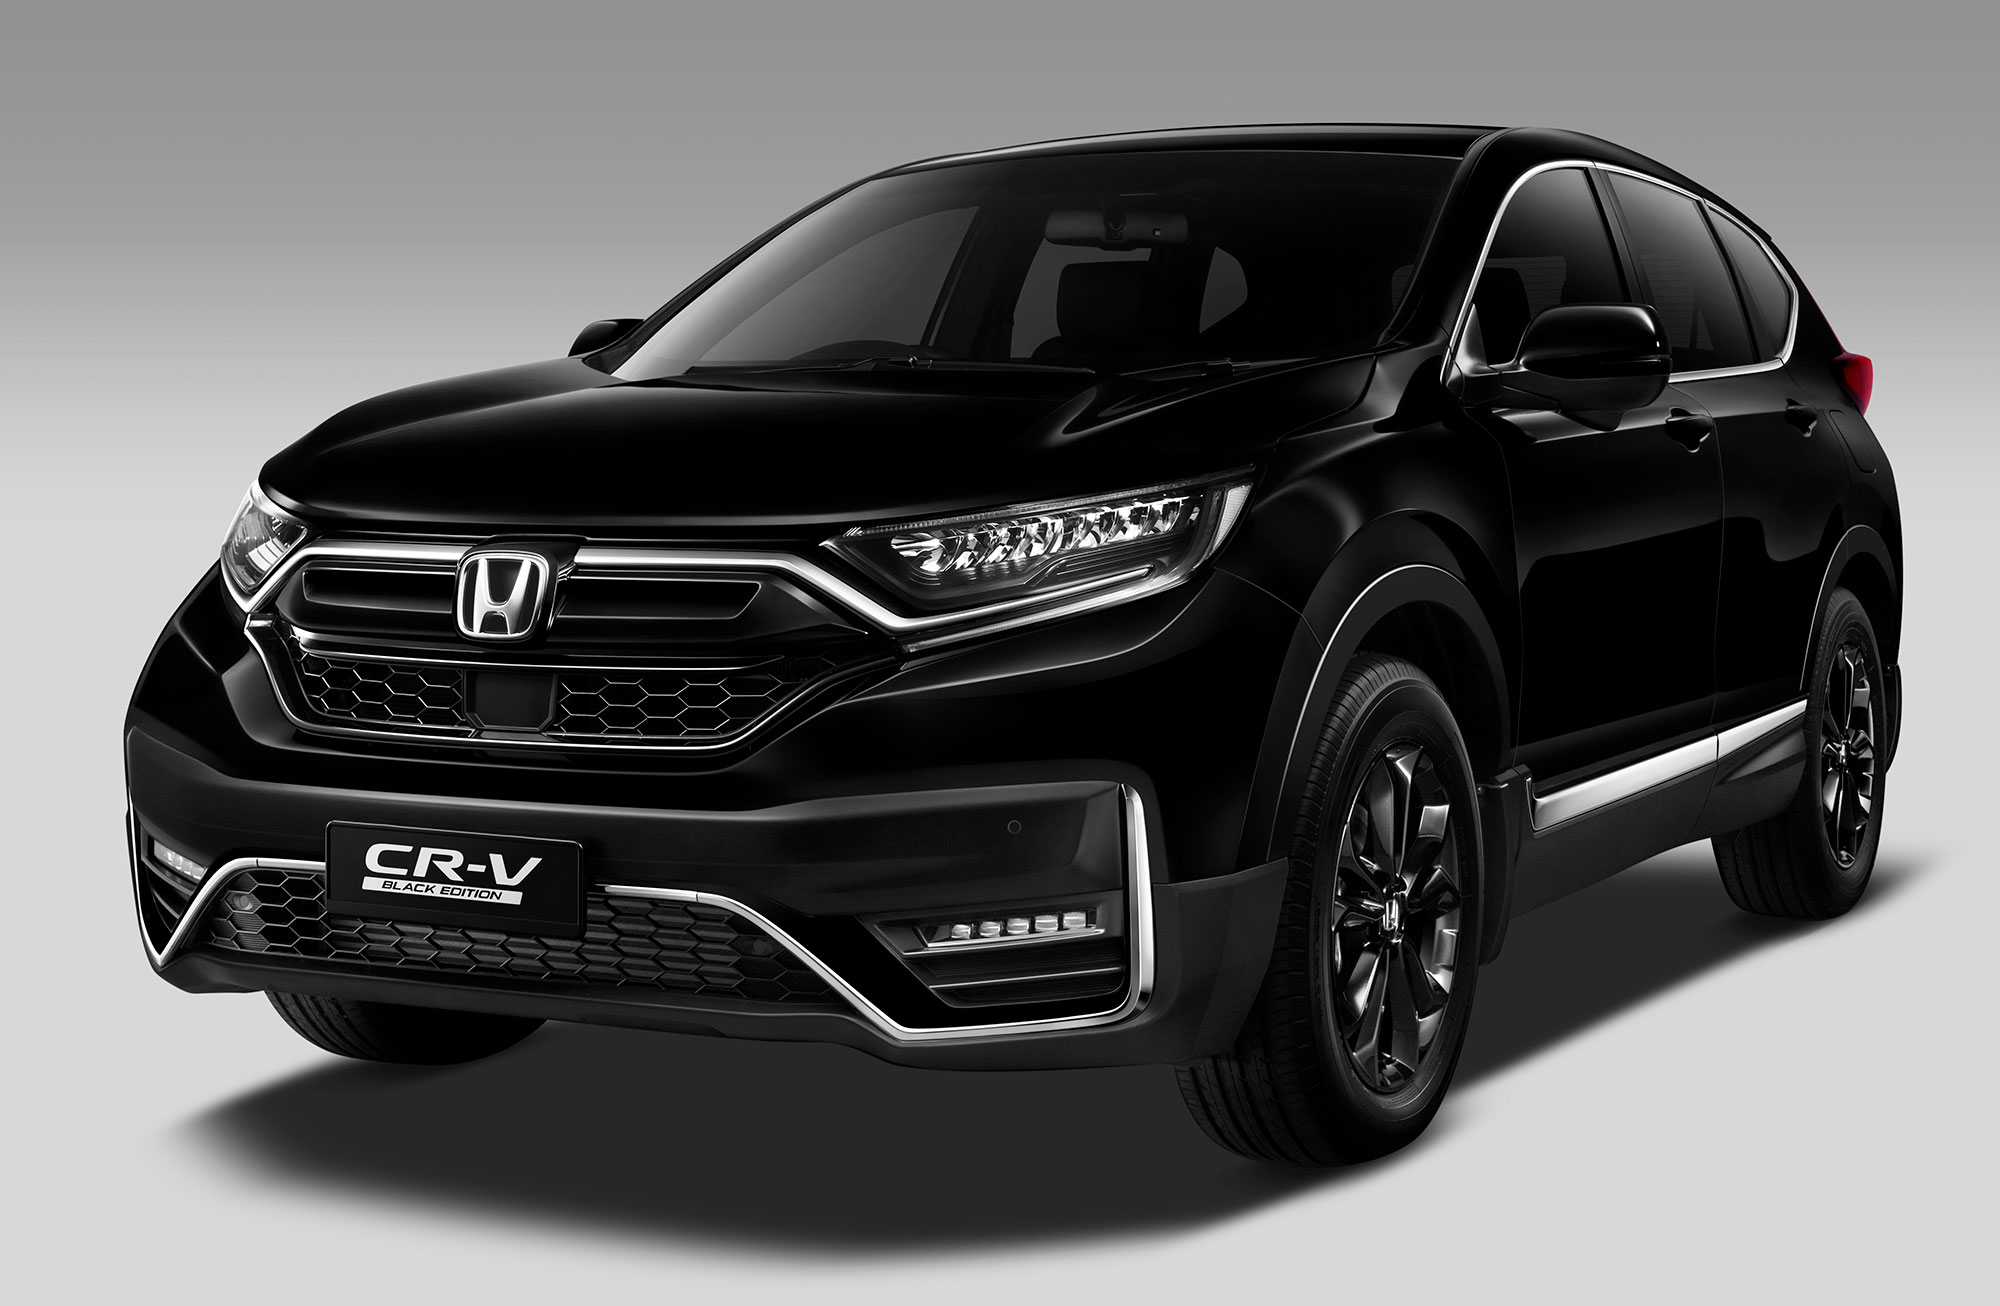 Honda crv black edition malaysia